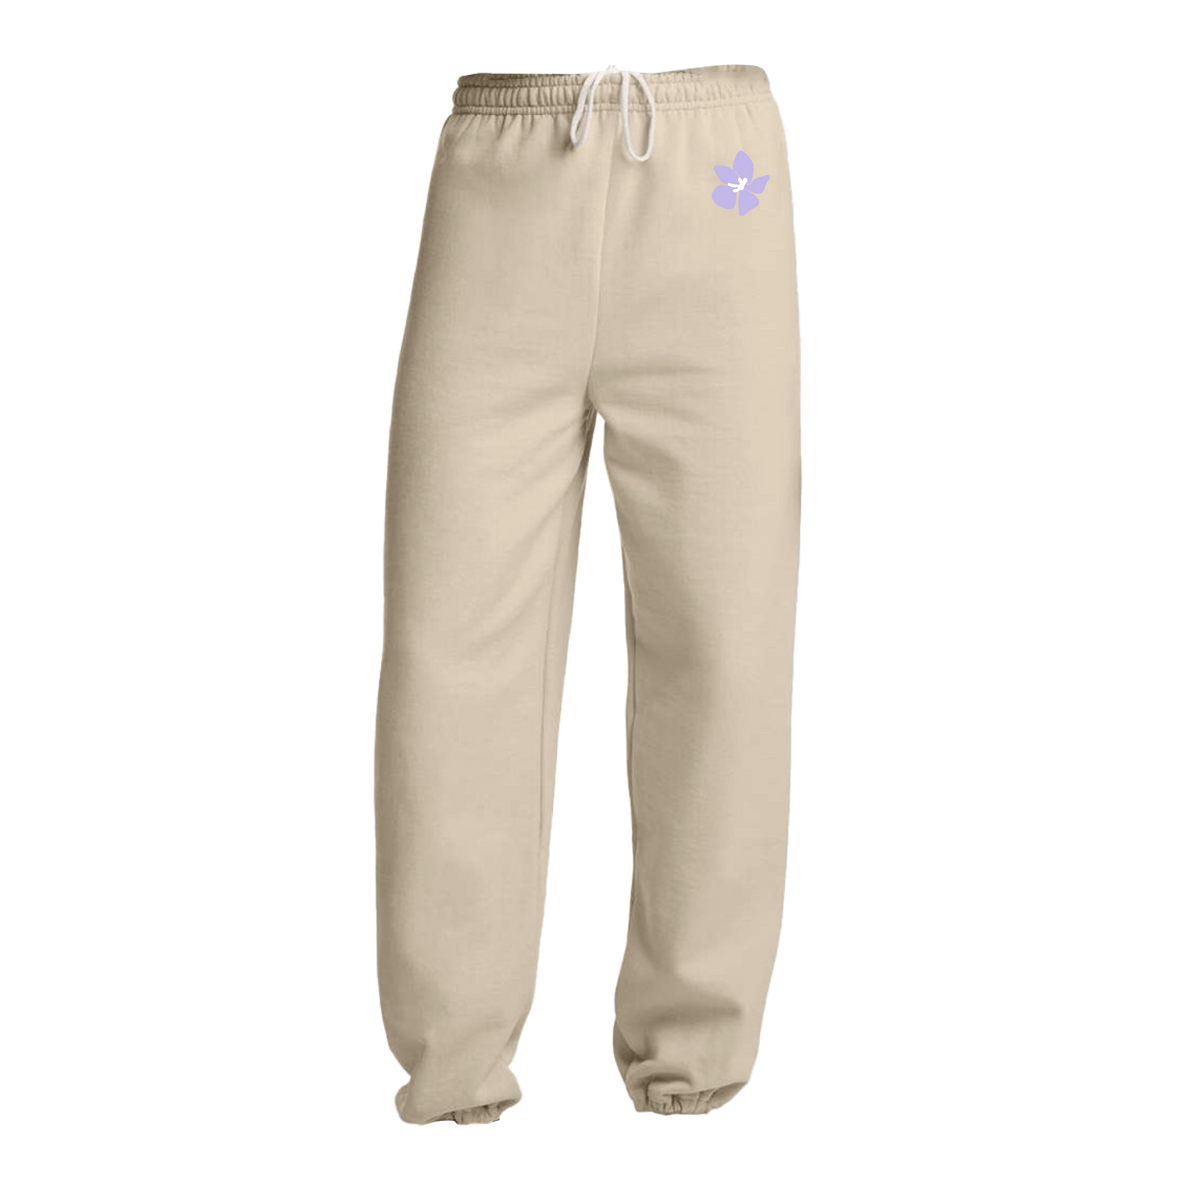 B-Unlimited Greek - Sweat Set Bottom (Violet) (SIGMA KAPPA) - Gildan - 18200 - Sweatpants - Sand